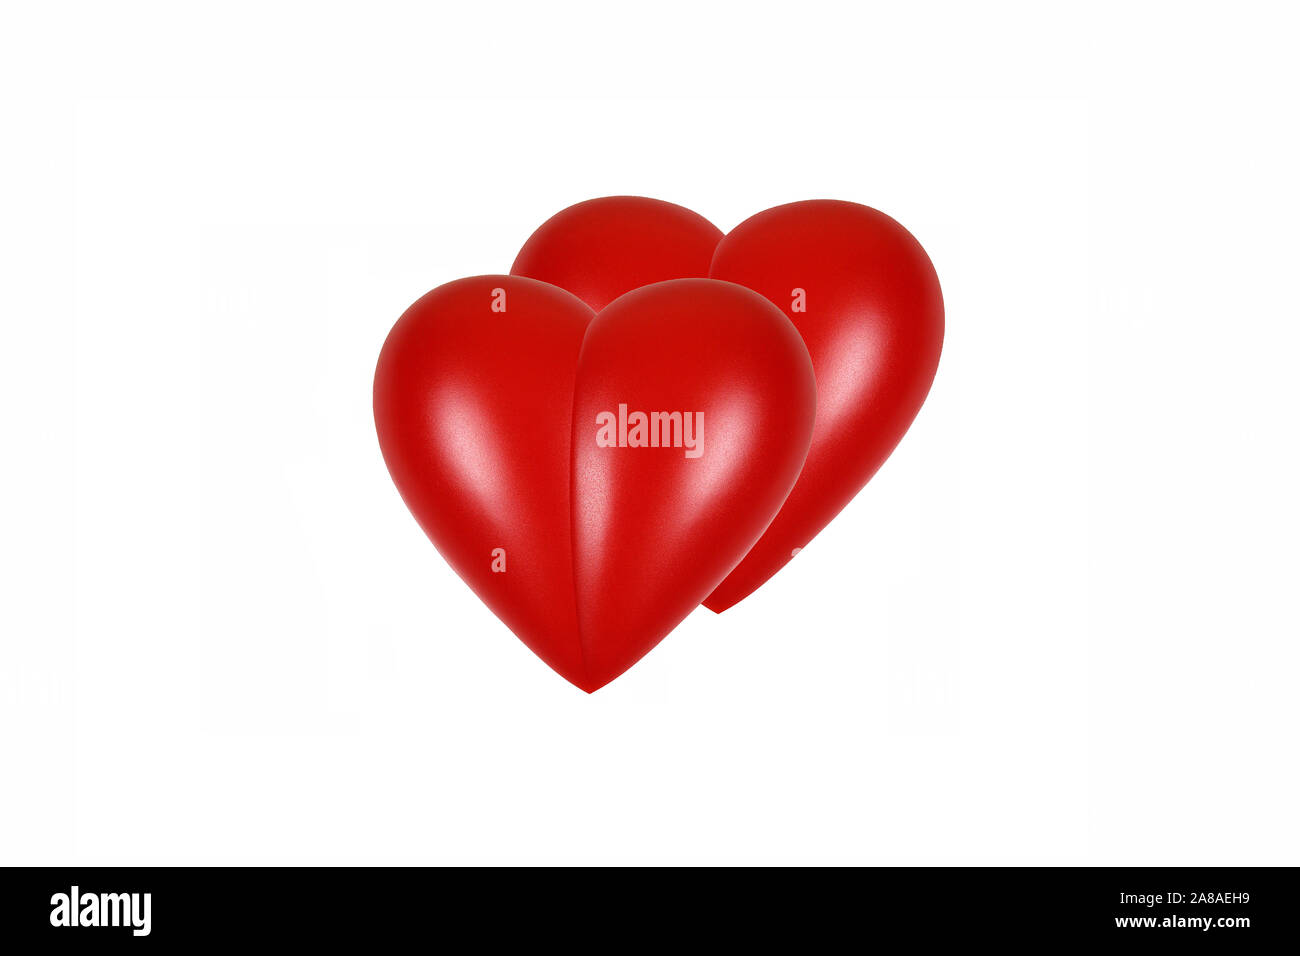 Rotes Herz, Organ, Gesundheit, Körperteil, Doppelherz, Liebe, Partnerschaft, Zuneigung, Stock Photo